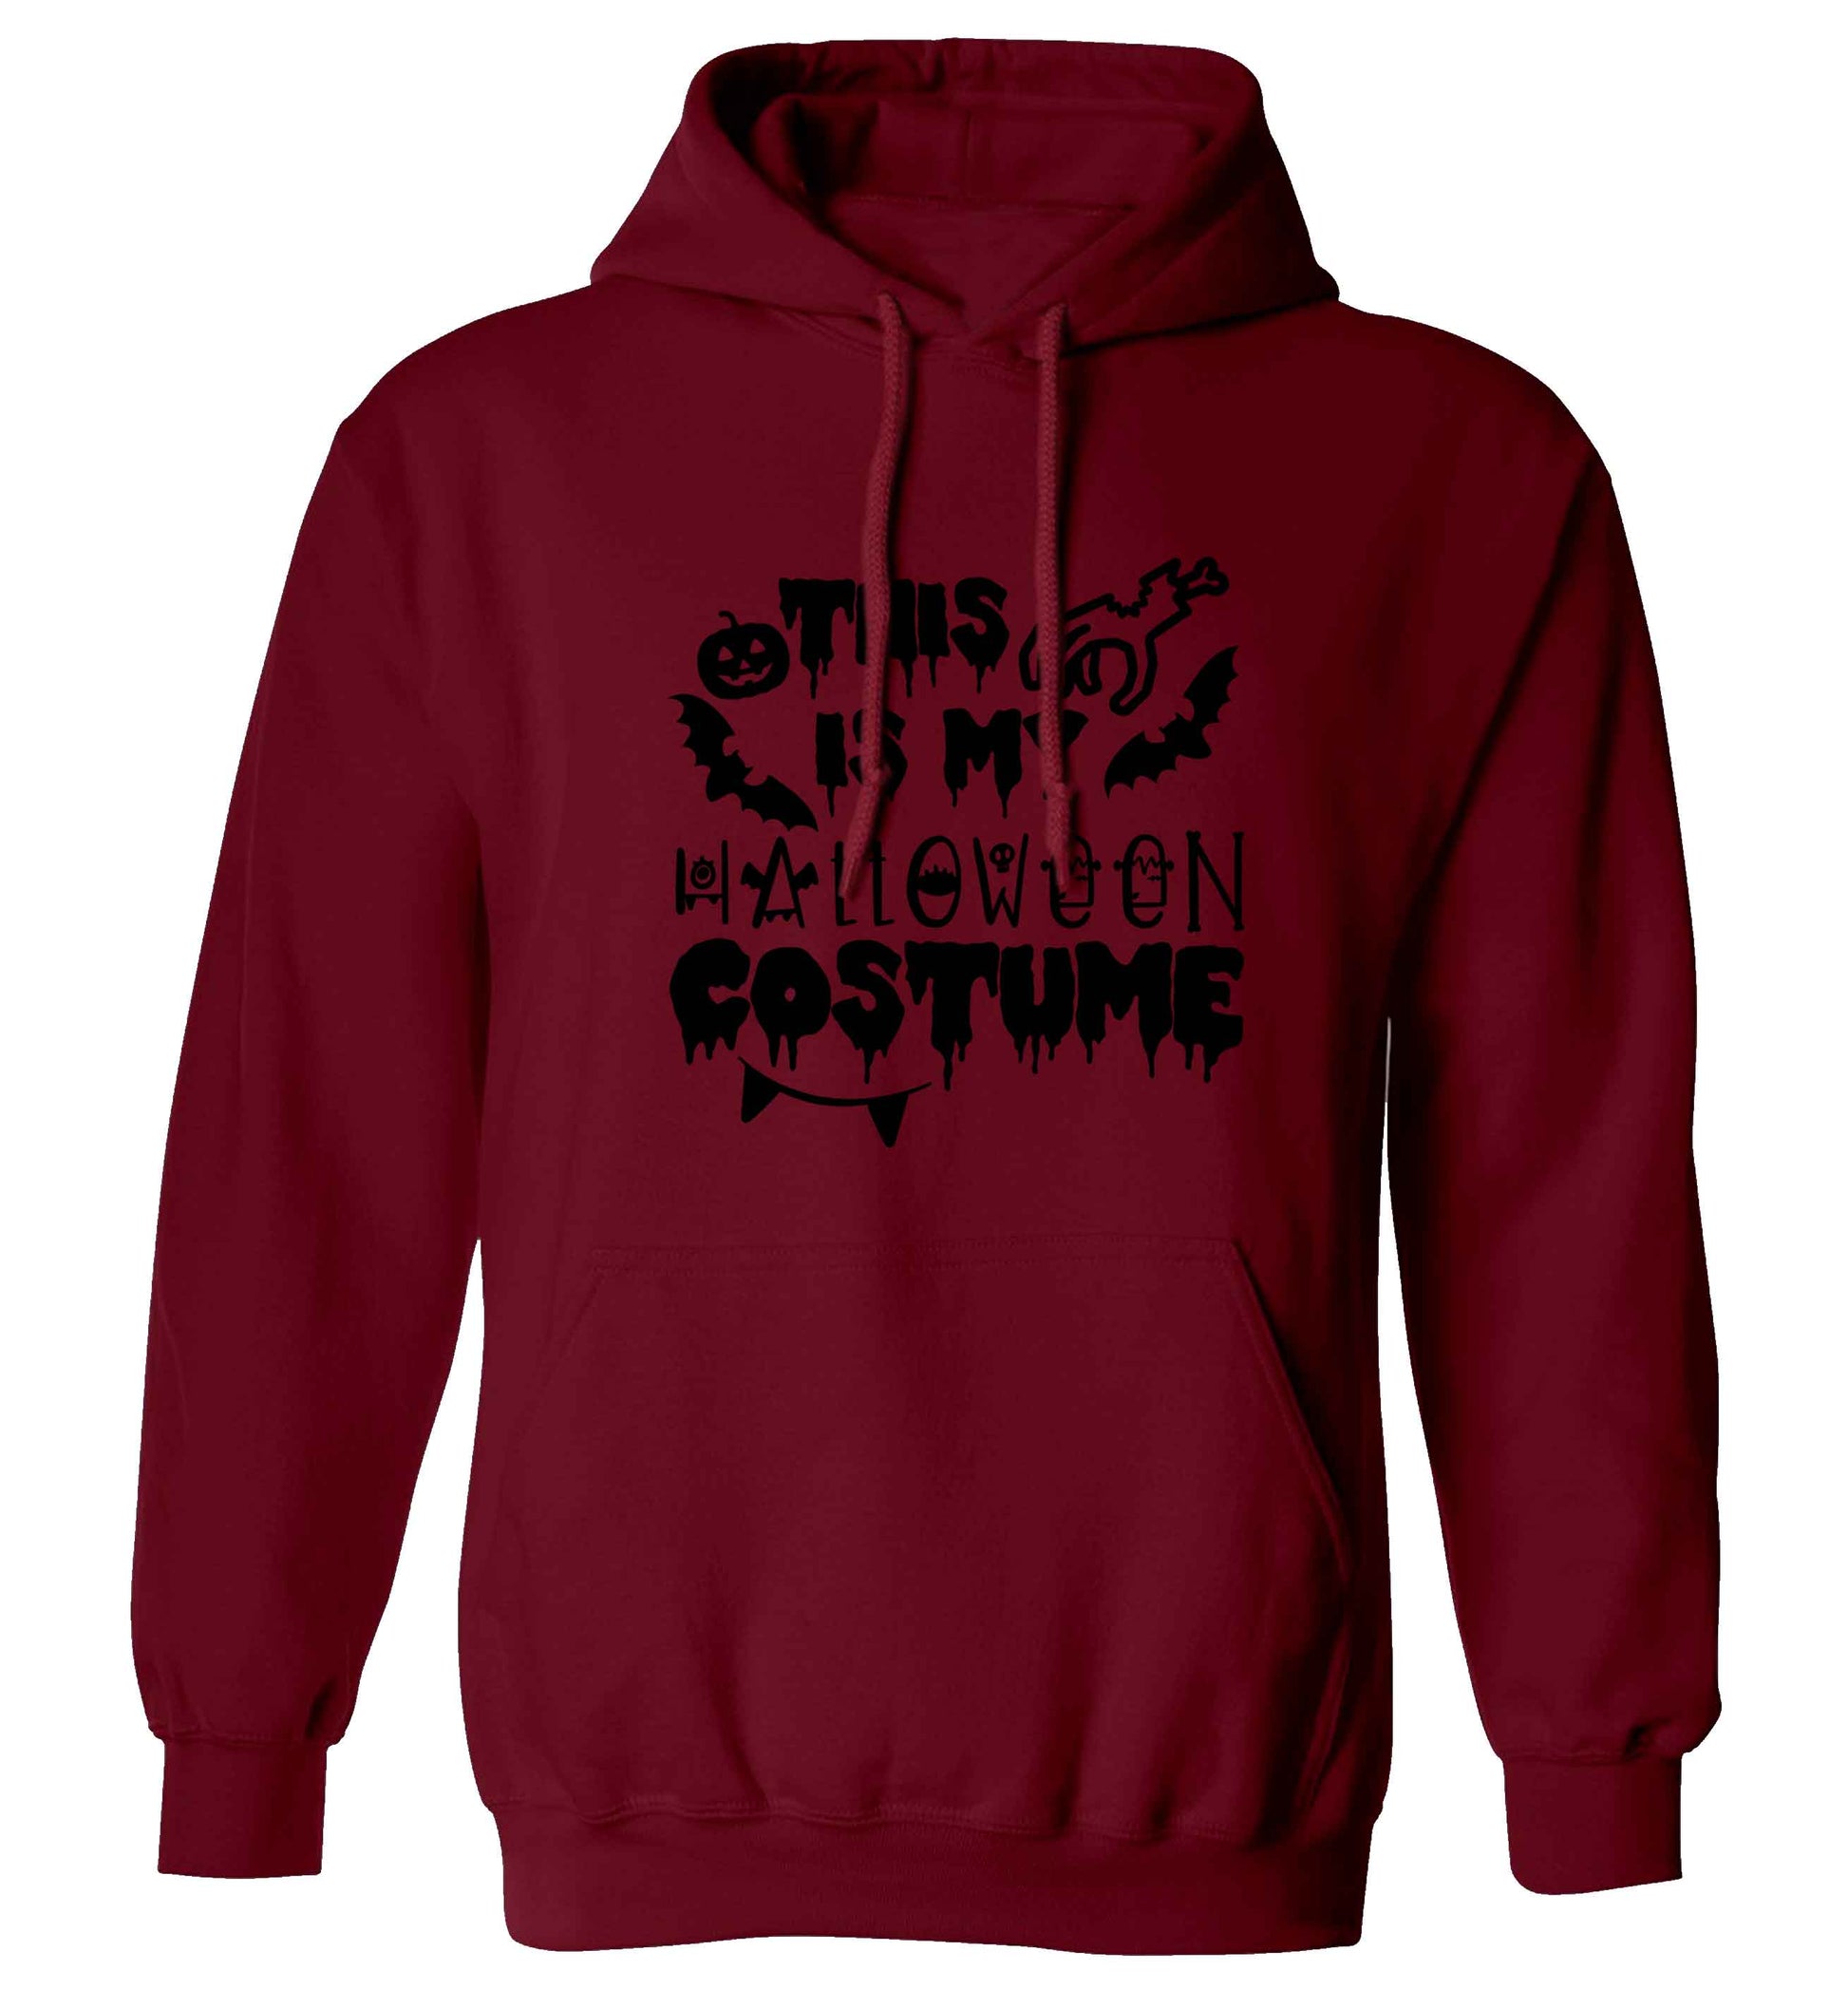 This is my halloween costume adults unisex maroon hoodie 2XL